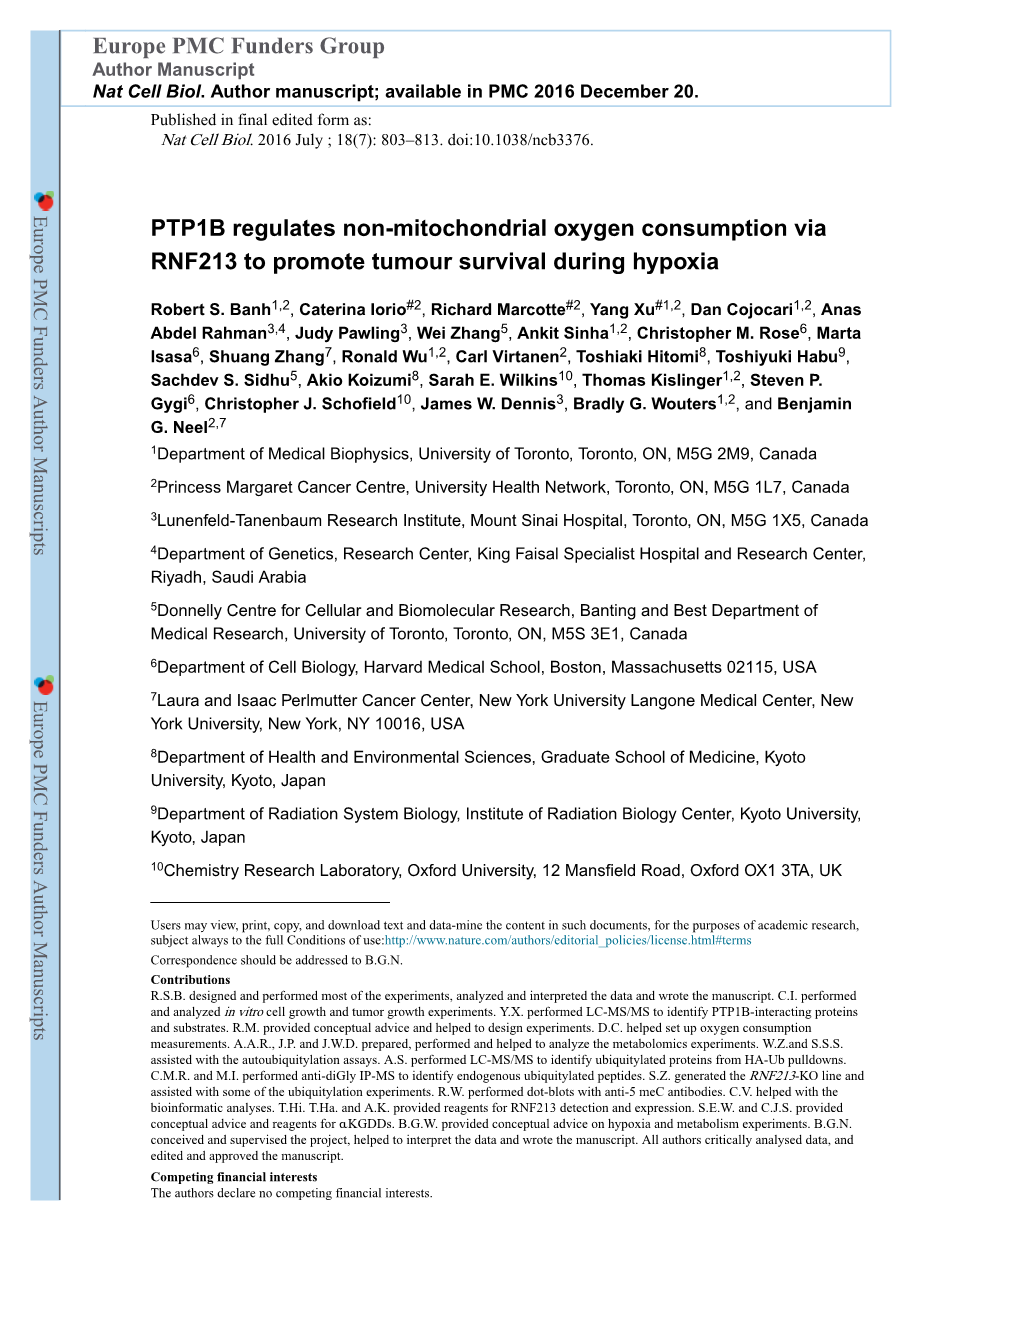 PTP1B Regulates Non-Mitochondrial Oxygen Consumption Via RNF213 to Promote Tumour Survival During Hypoxia